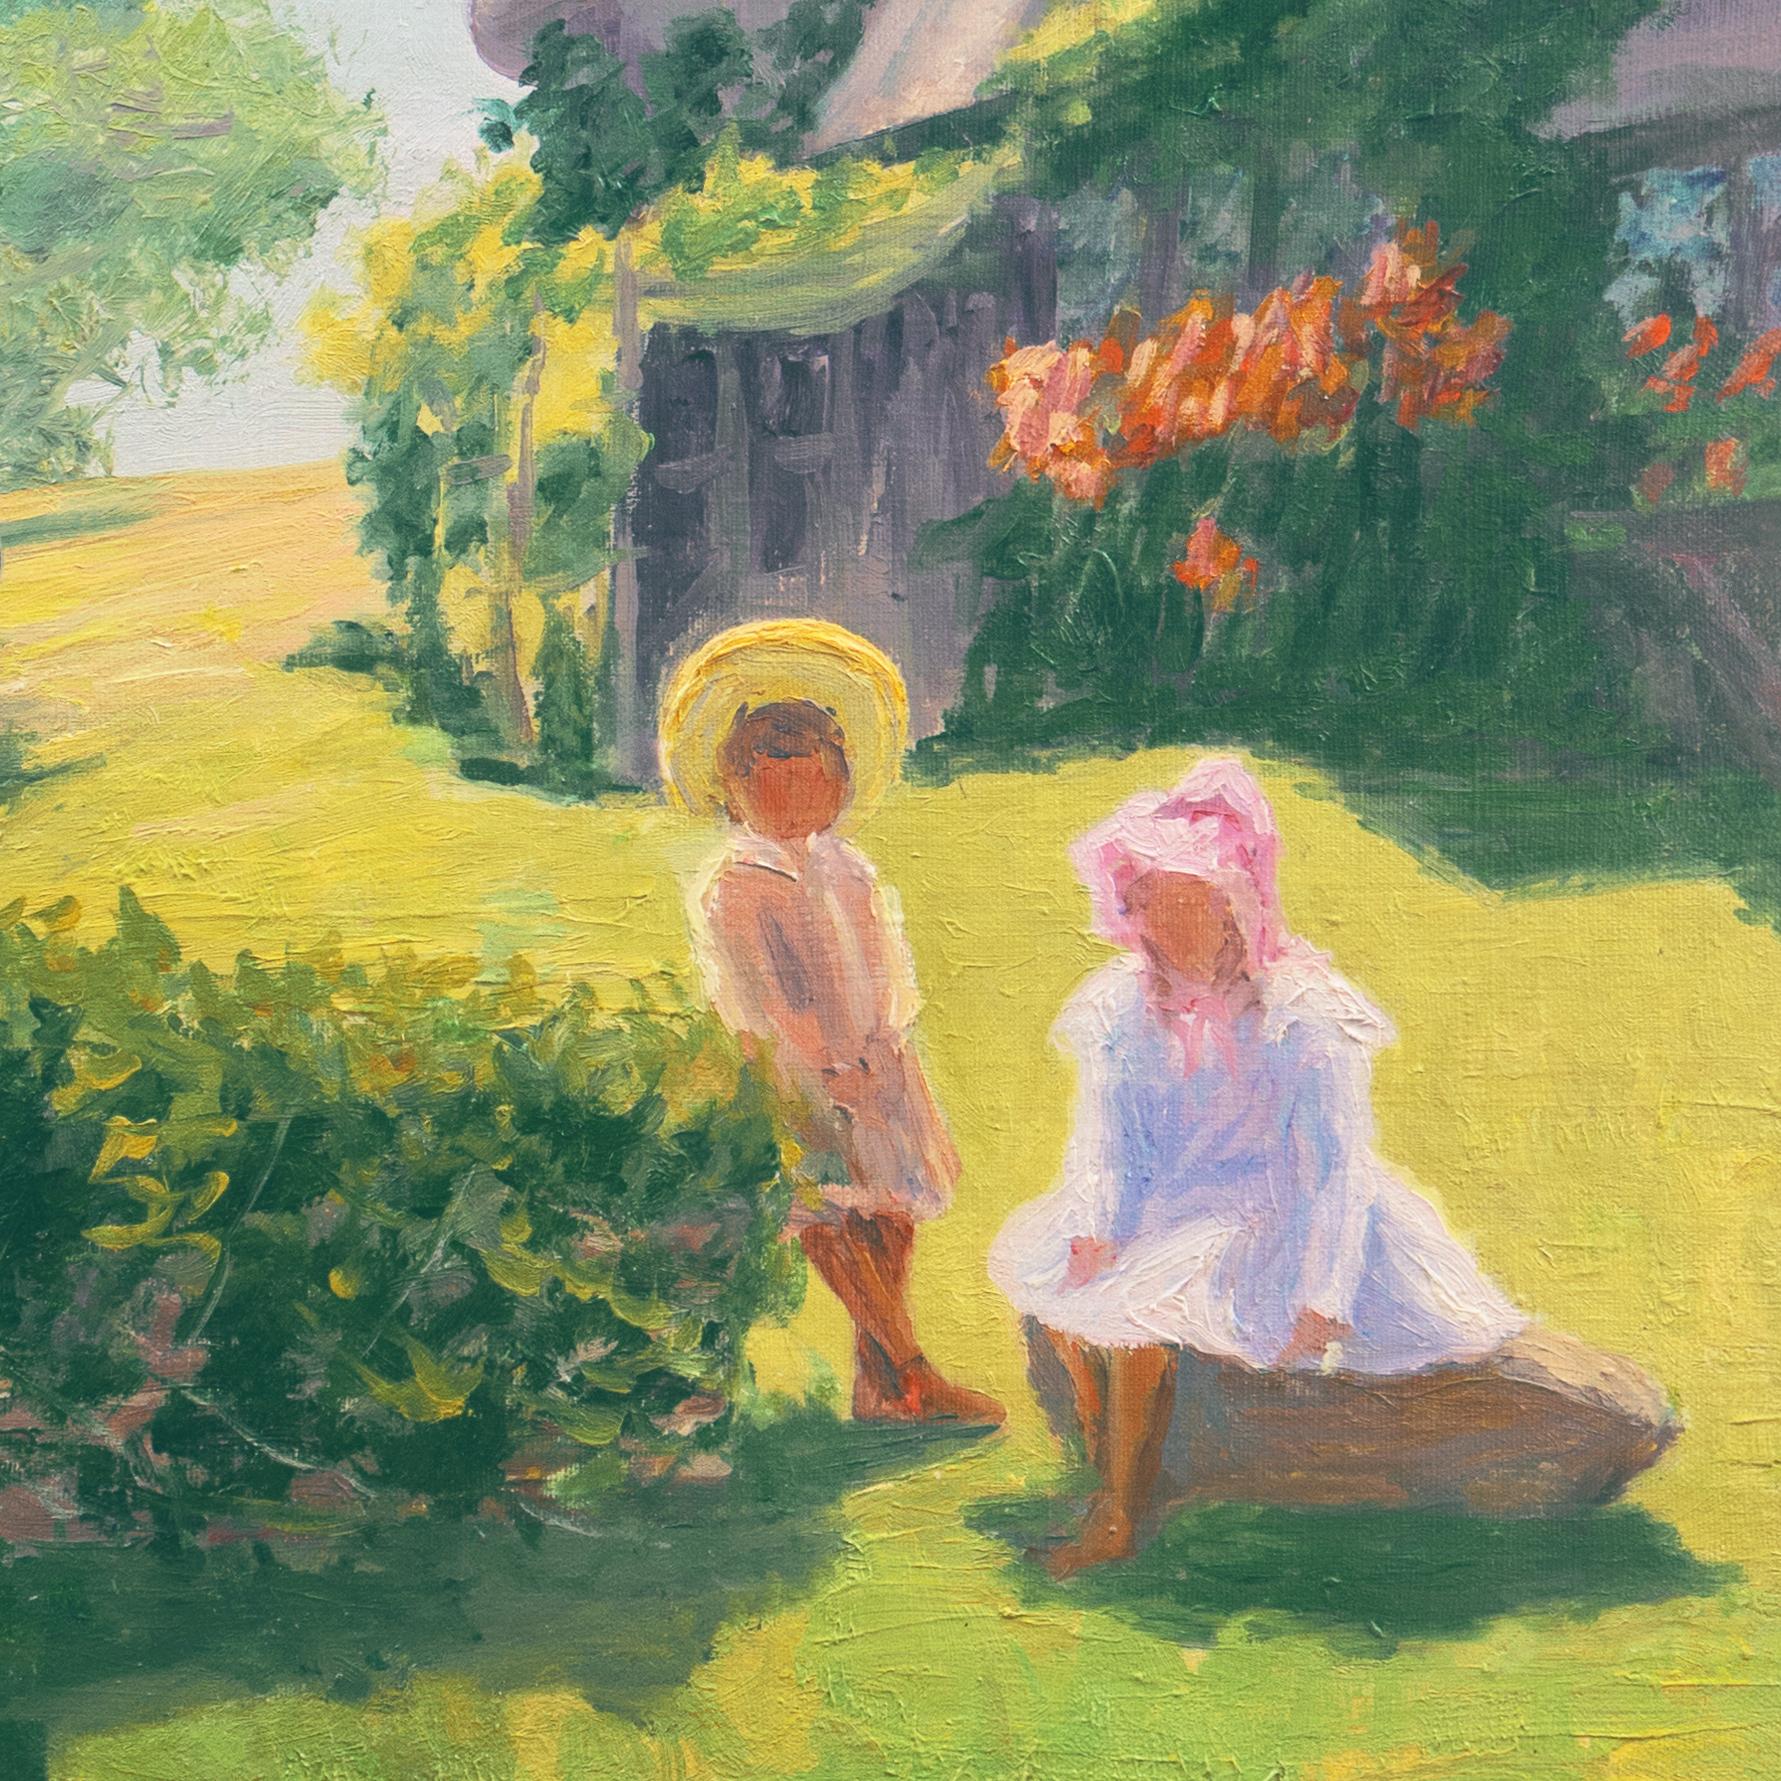 'Summer Days', Idyllic American Landscape, Children, Arts & Crafts Architecture - Painting by American School (20th century)